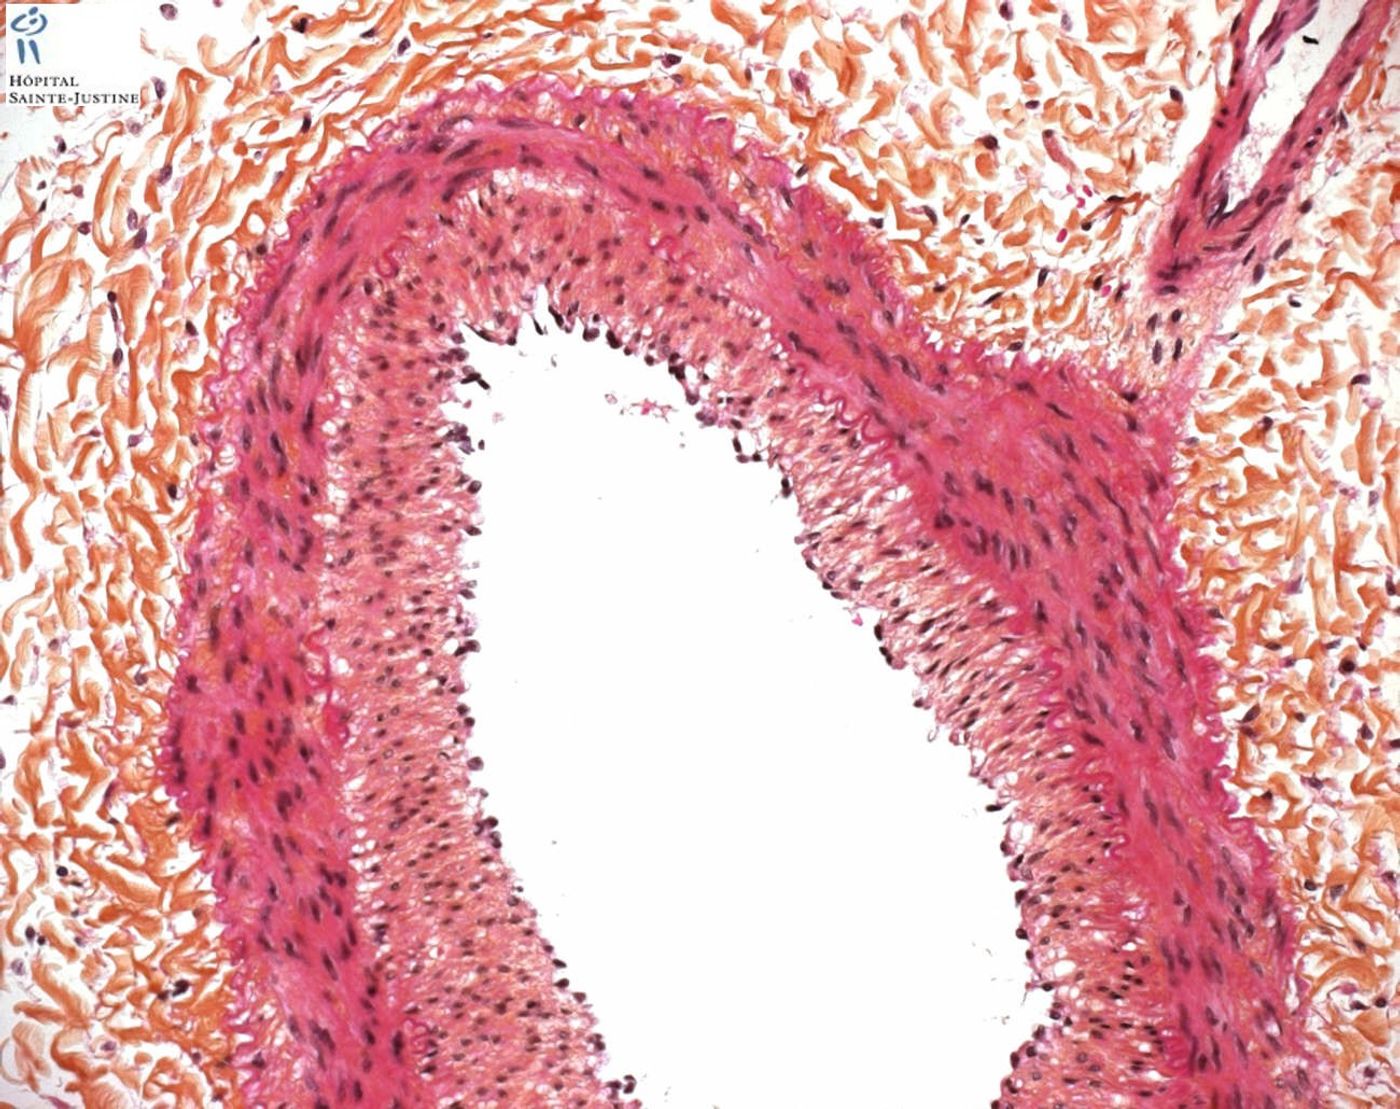 Intimal fibrosis in pulmonary artery. Source: Humpath.com